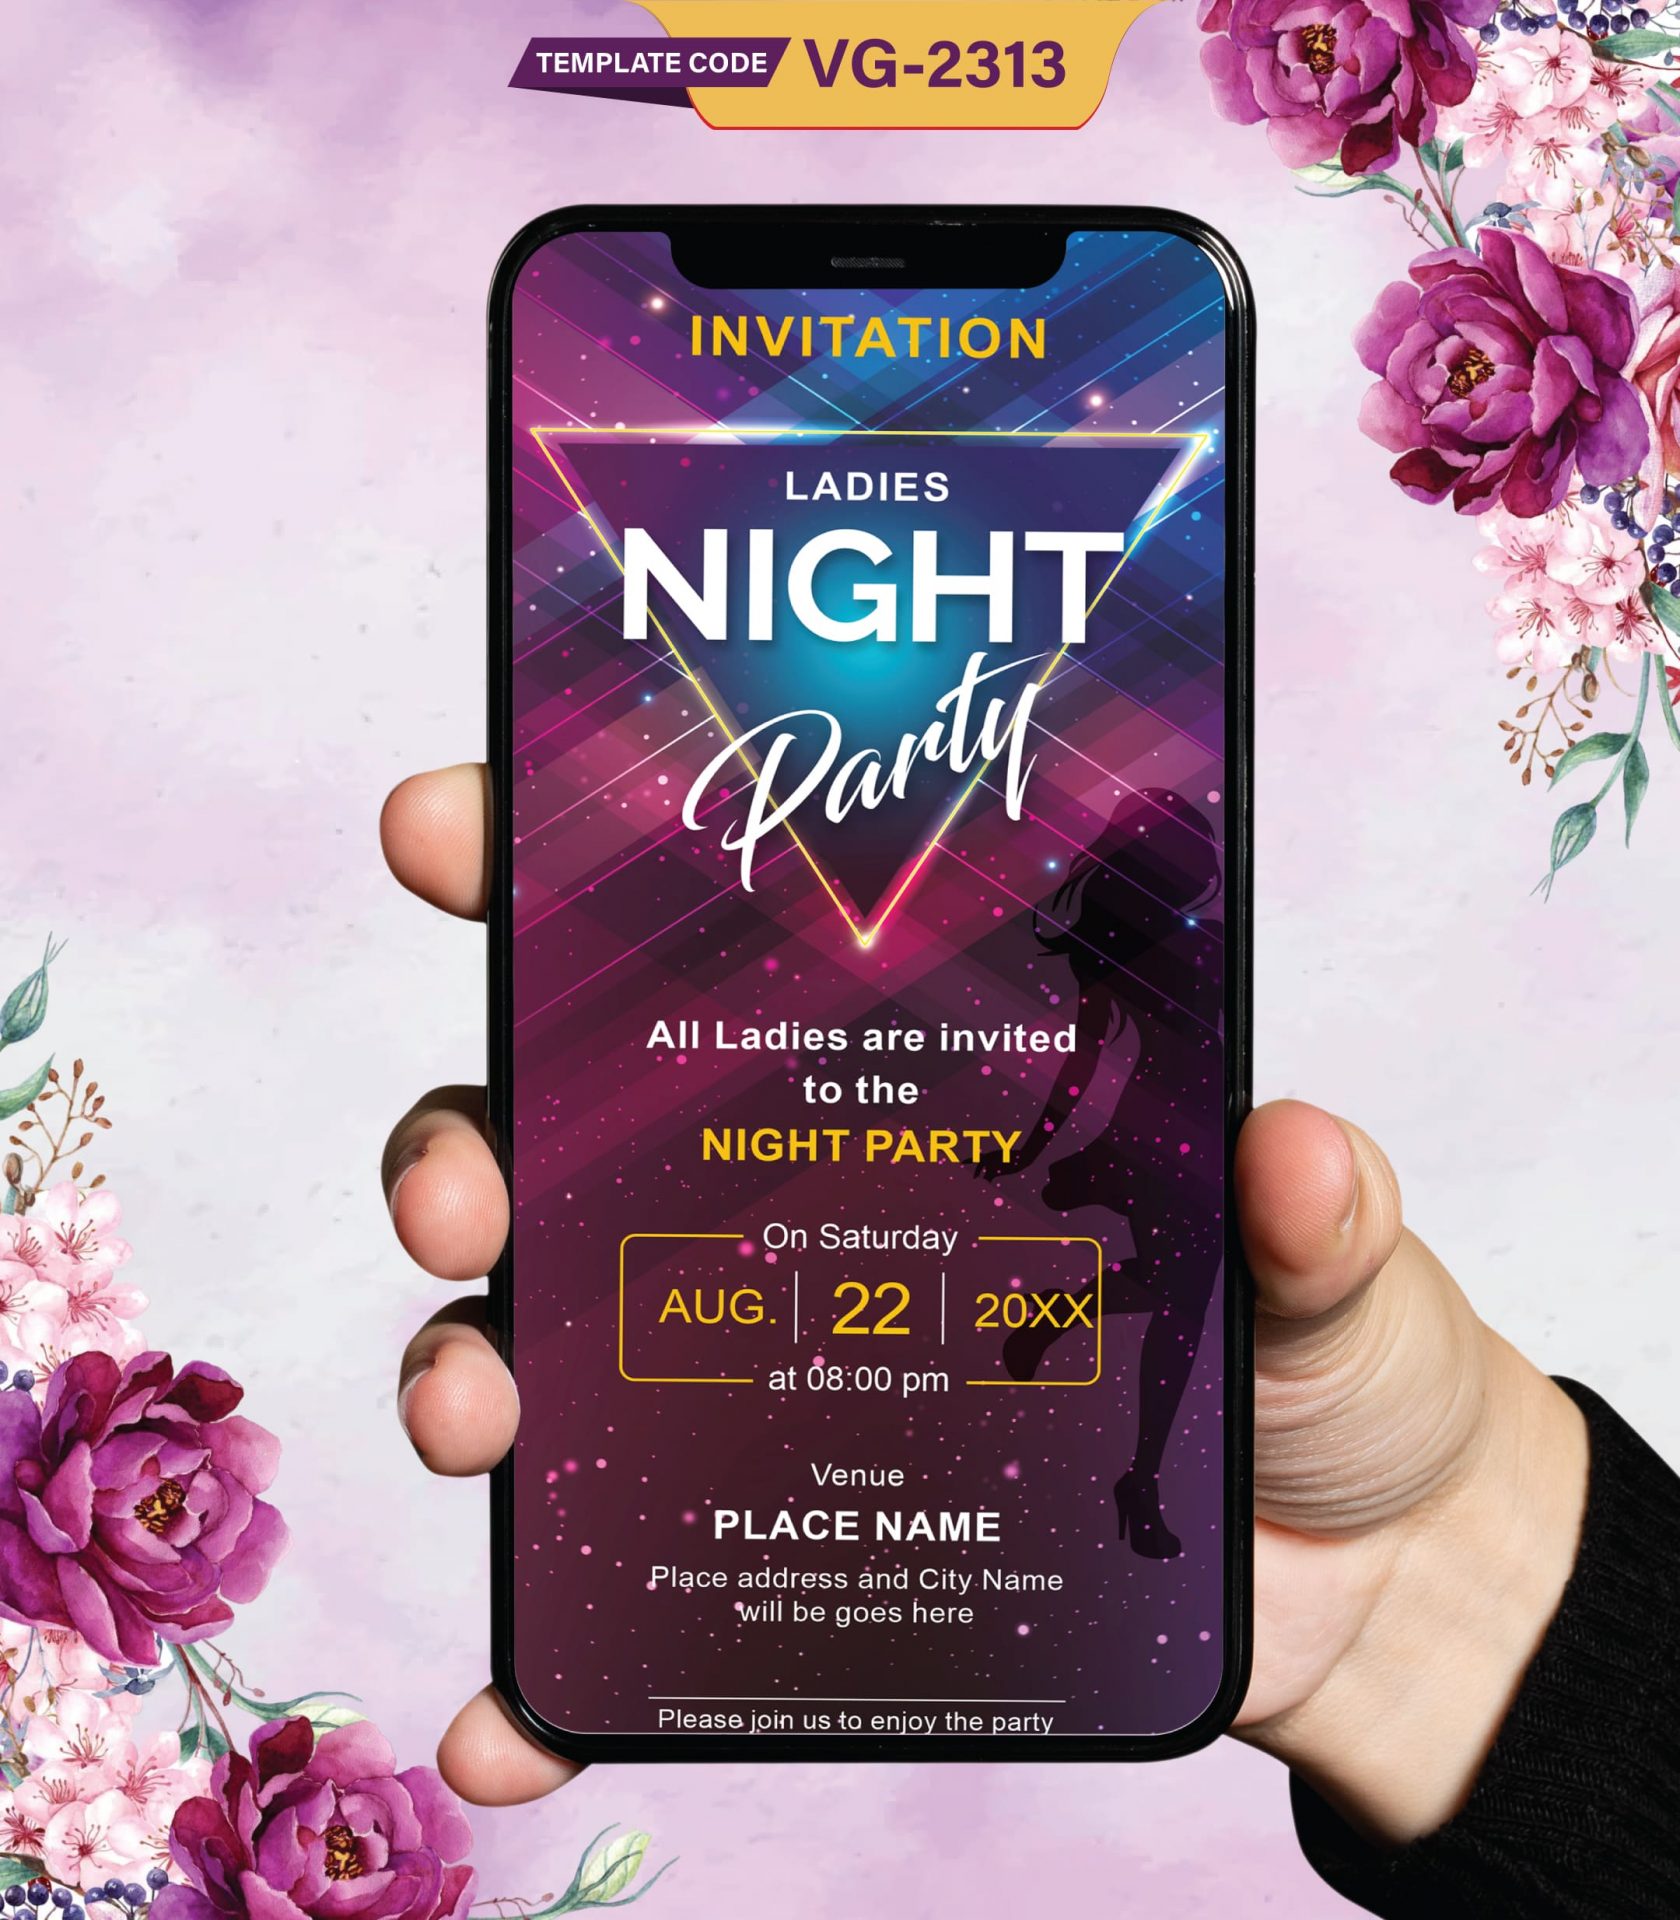 Ladies Night Party Invitations